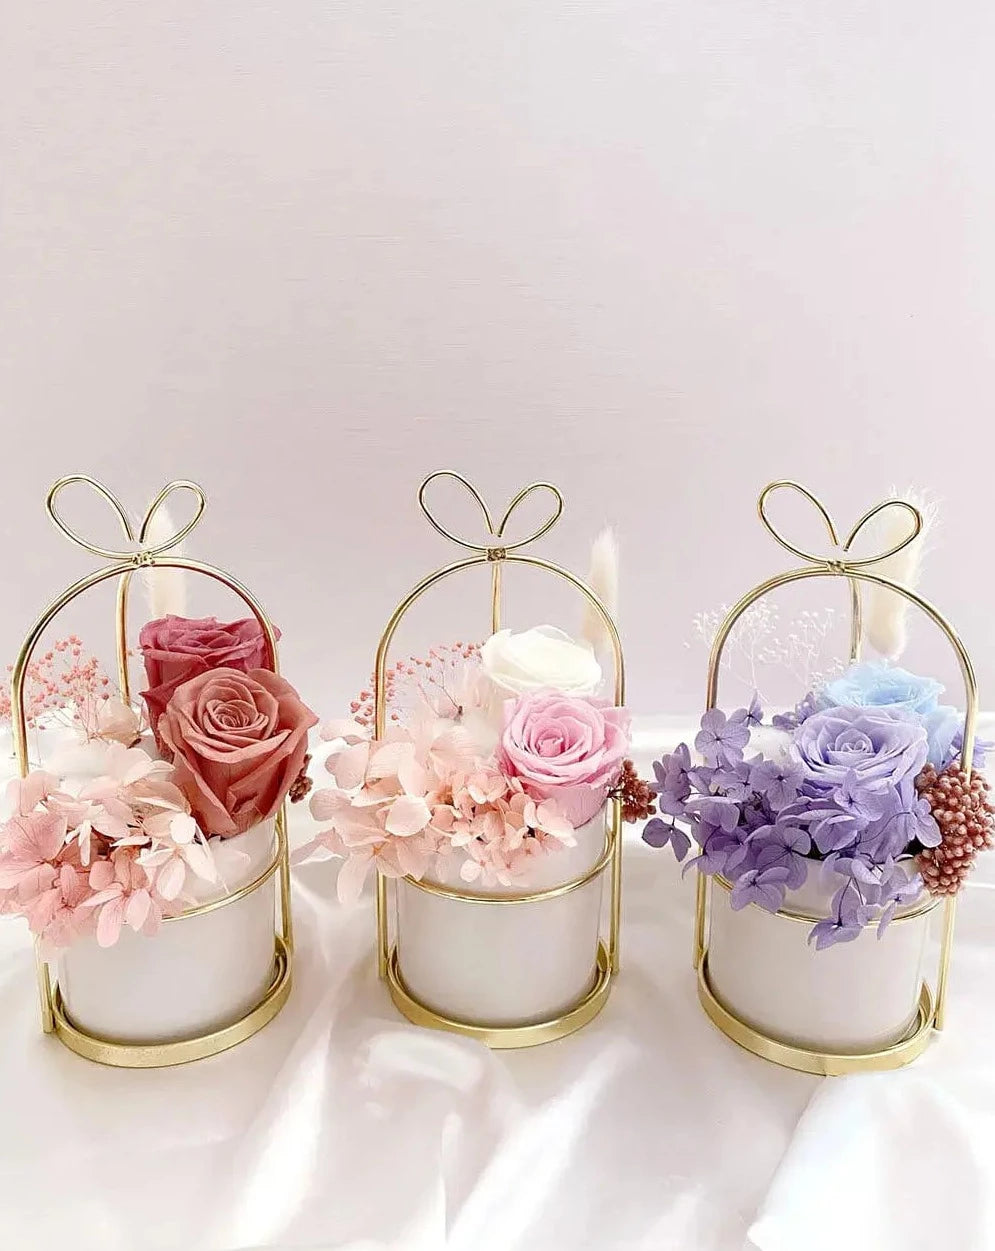 Preserved Flower Arrangement in Mini Flower Pot with Bunny Ears The Rose Ark